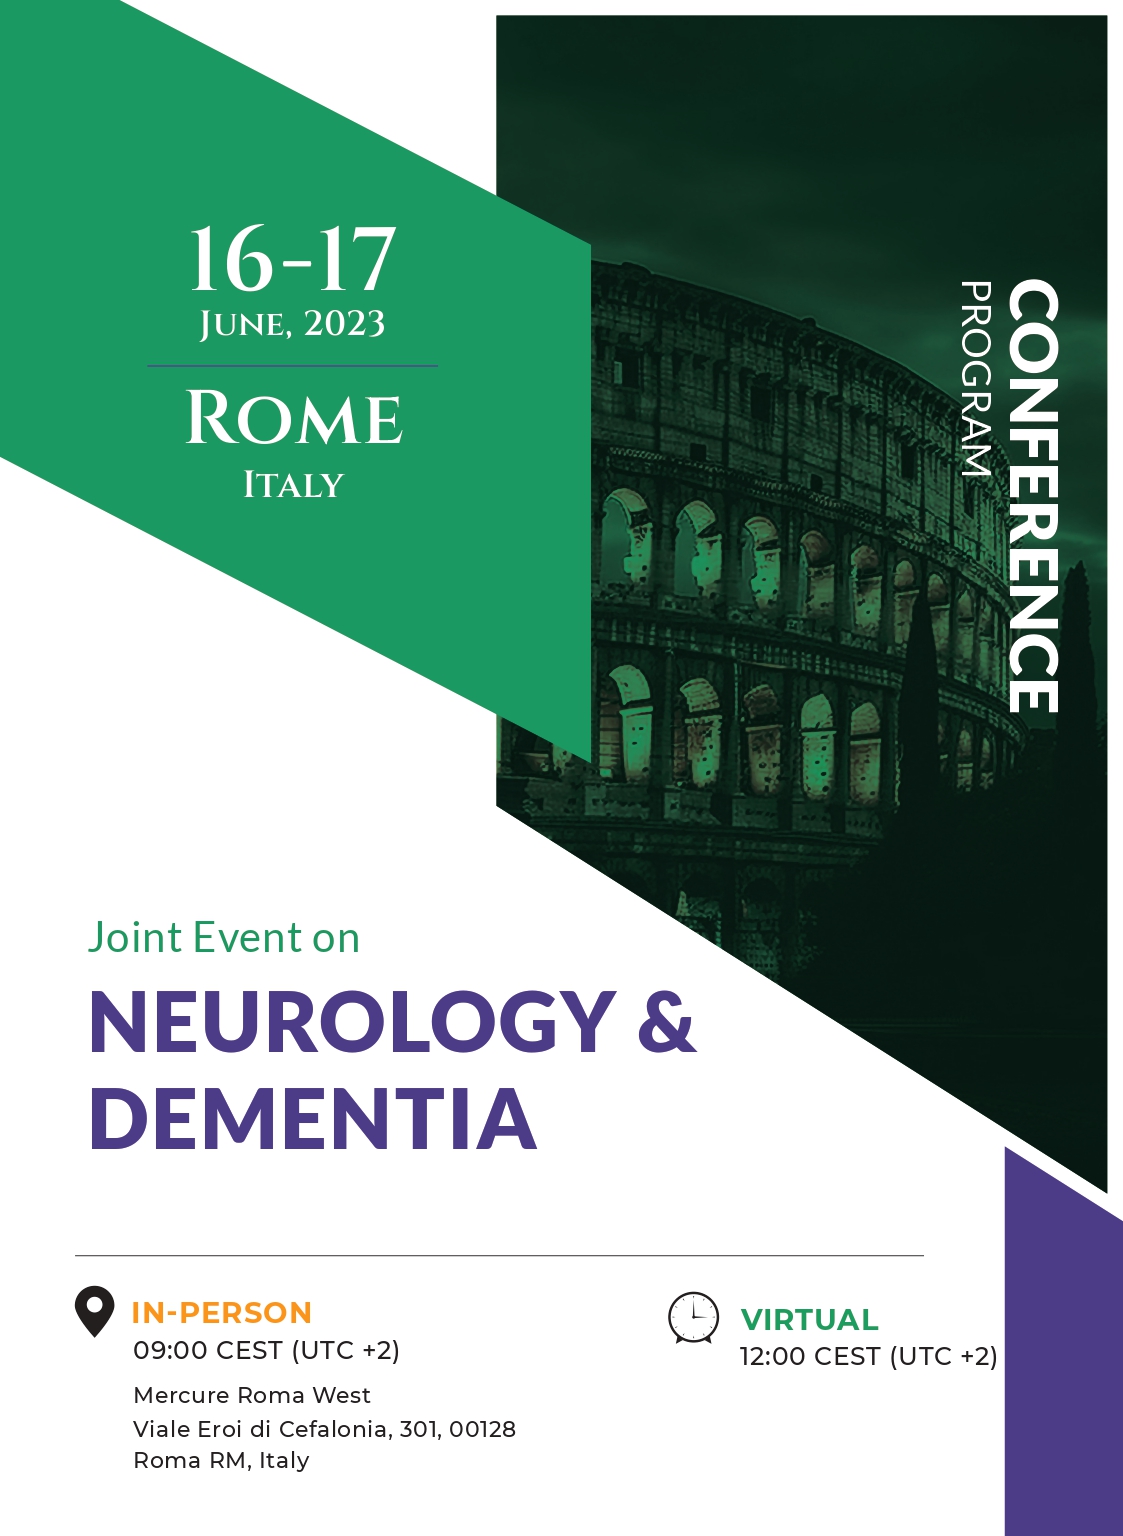 Neurology and Neurological Disorders | Rome, Italy Program